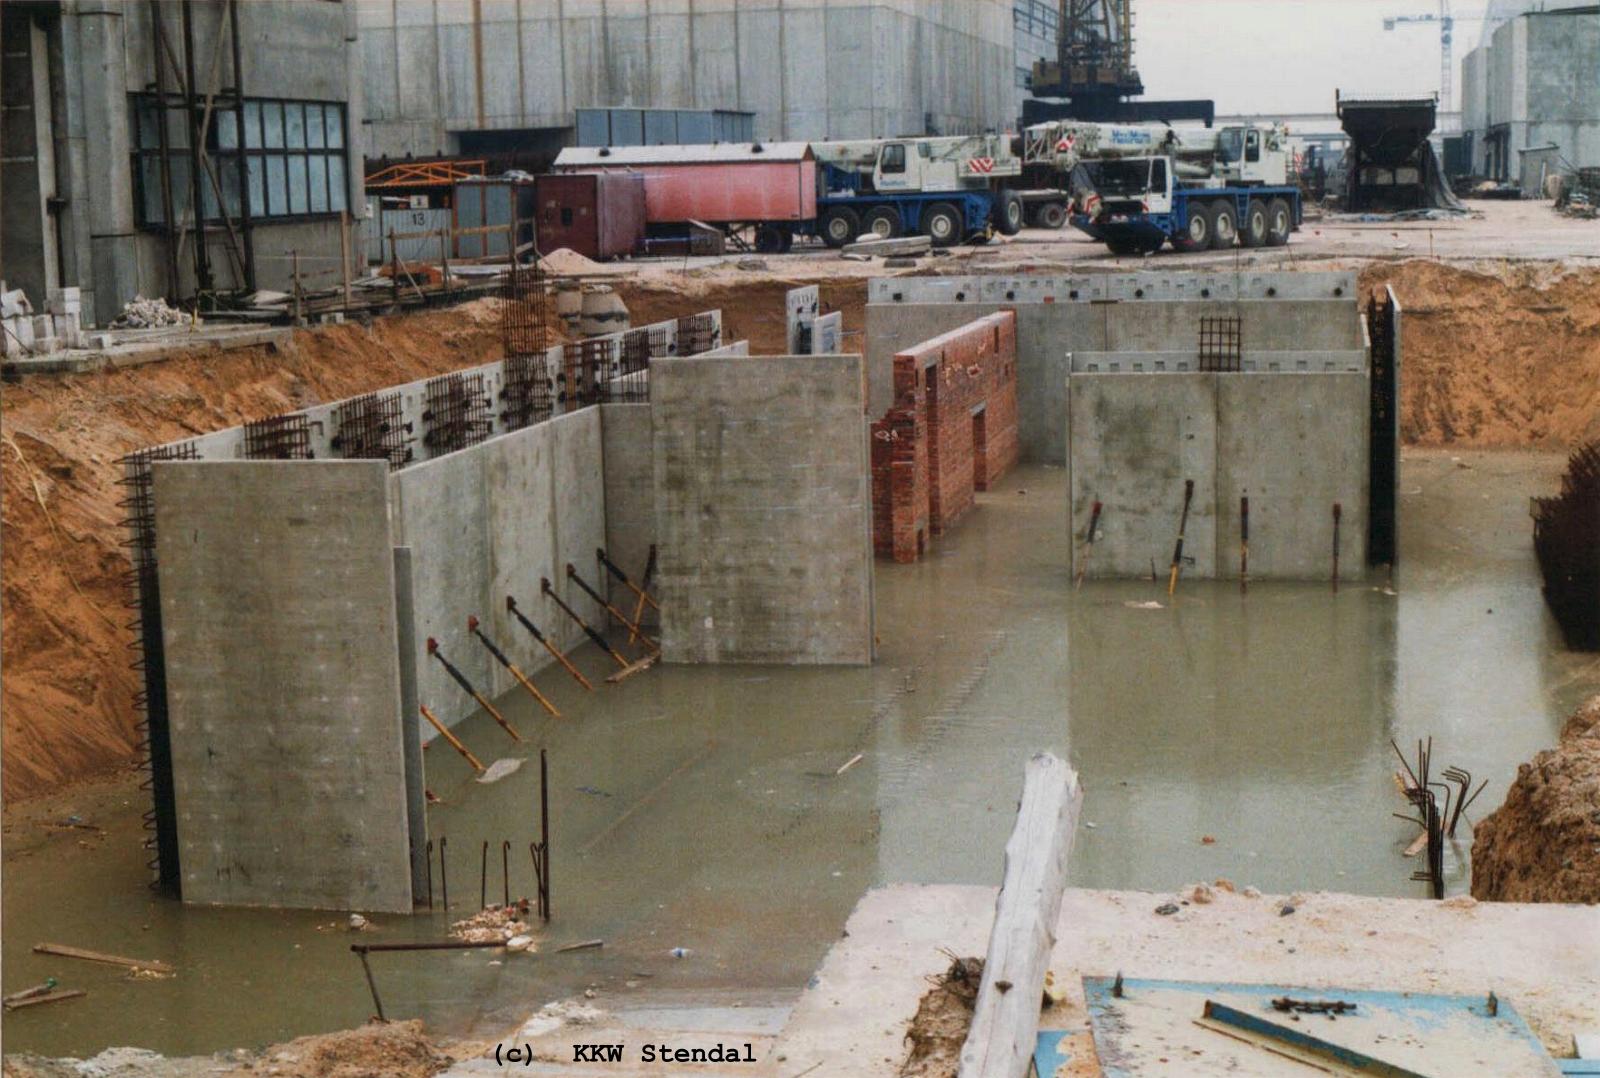  KKW Stendal, Baustelle 1990, SS Strahlenschutzberwachungsgebude, Baugrube
 Kellergescho 